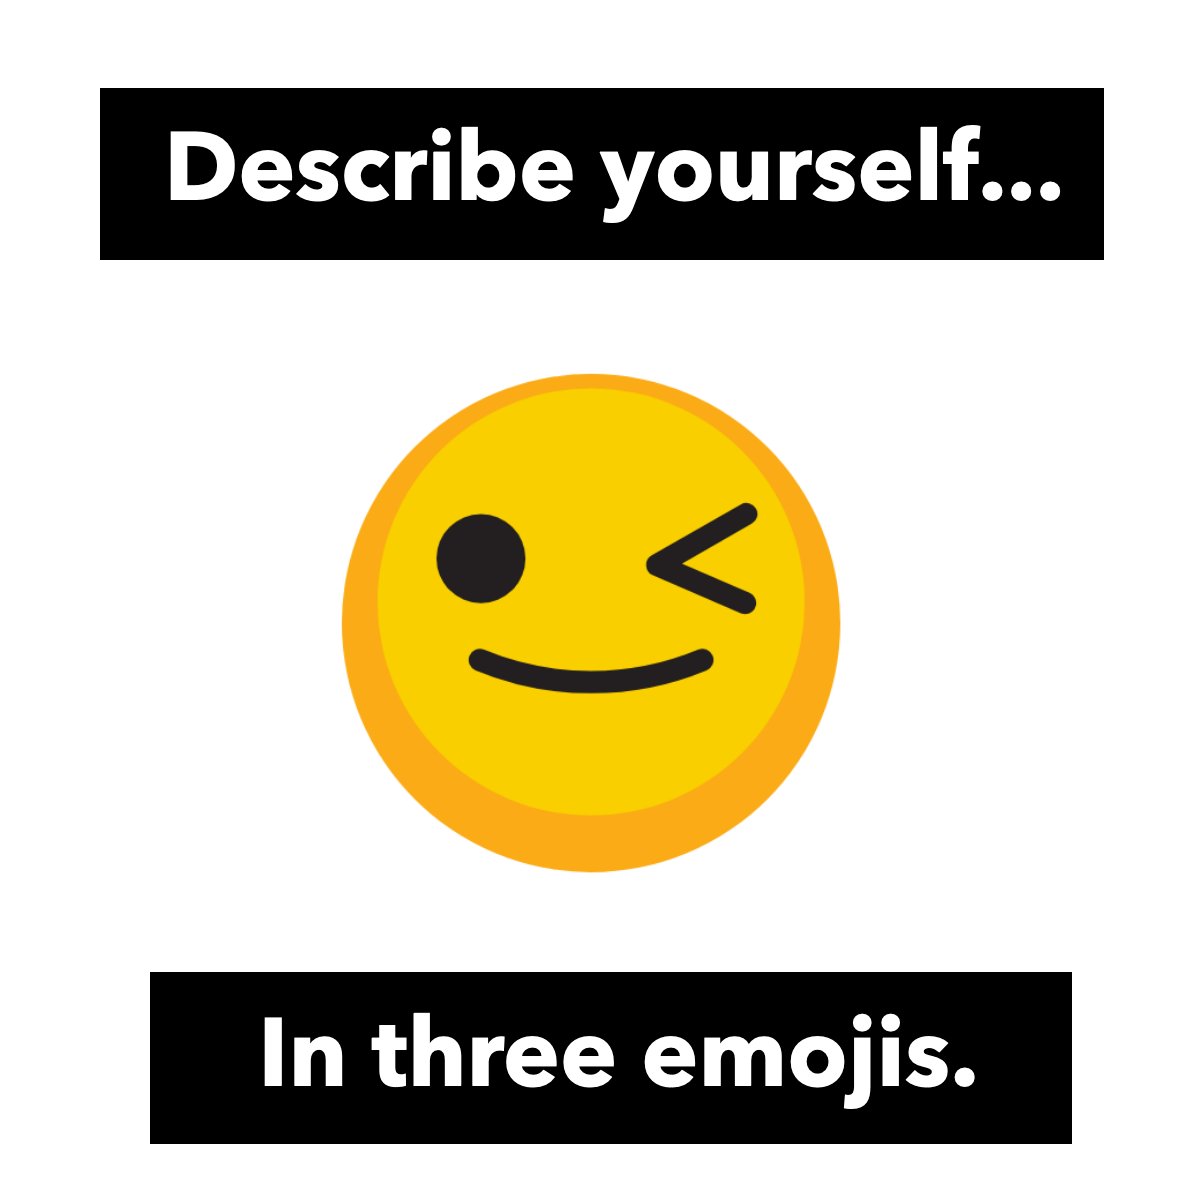 Remember, you can only use three. 🤯

#describeyourself   #emojis   #tellmeaboutyou   #emojibattle 
#RacingRealEstateAgent #BarrettRealEstate #StoneTreeRealEstateTeam #maricopaazrealestate #racingagent #arizonarealestate #phoenixrealestateagent #nascarfanrealtor